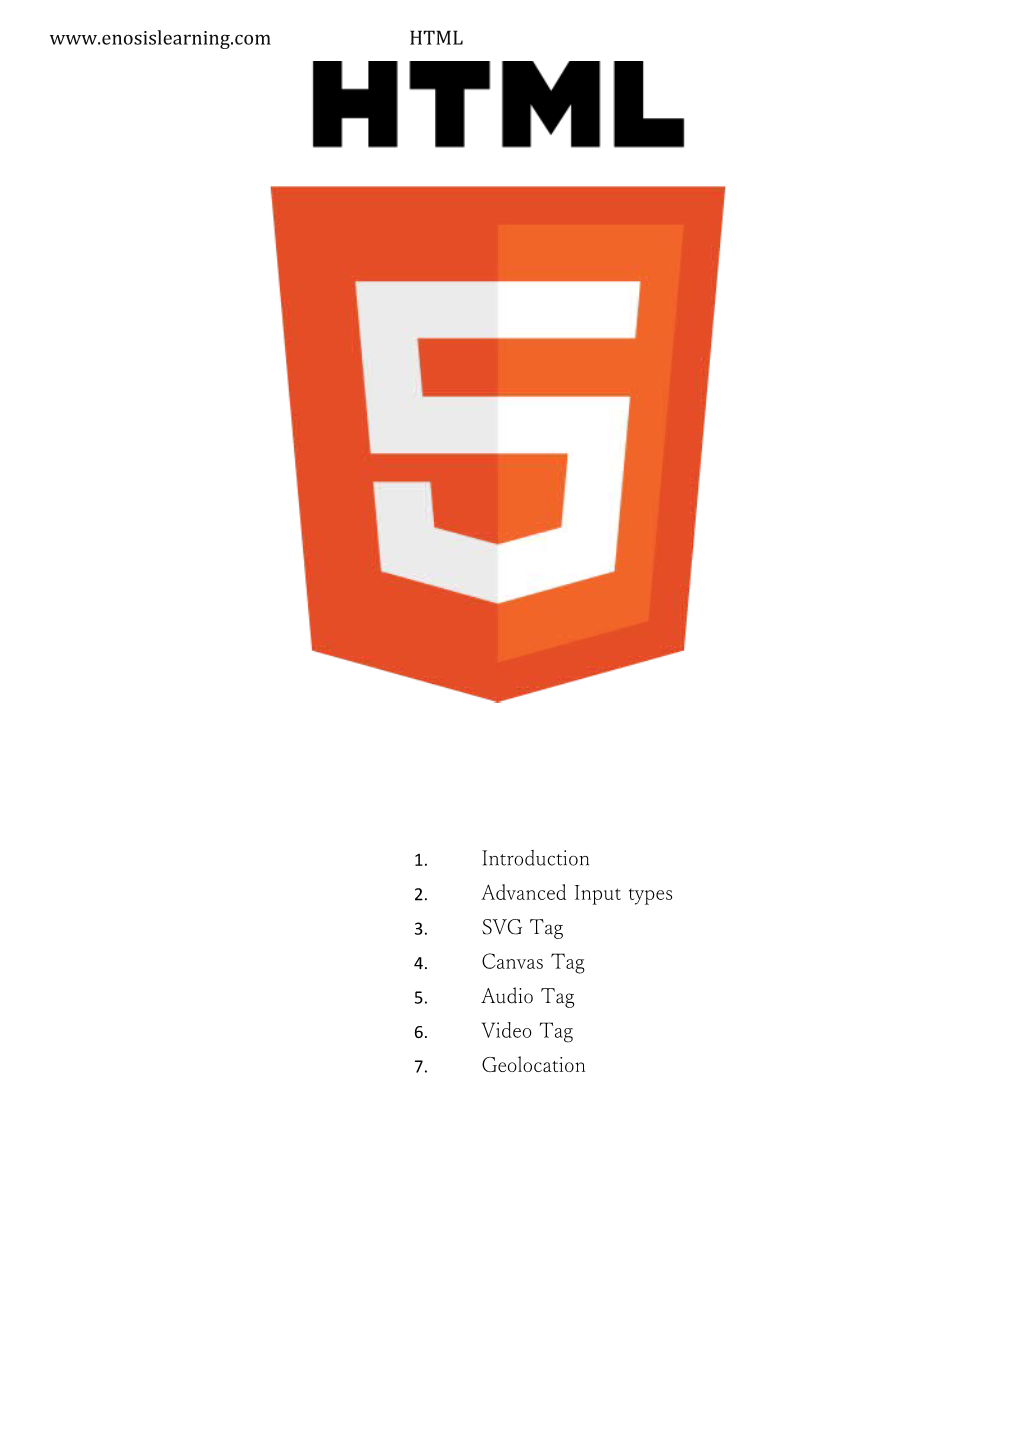 New HTML 5 Elements